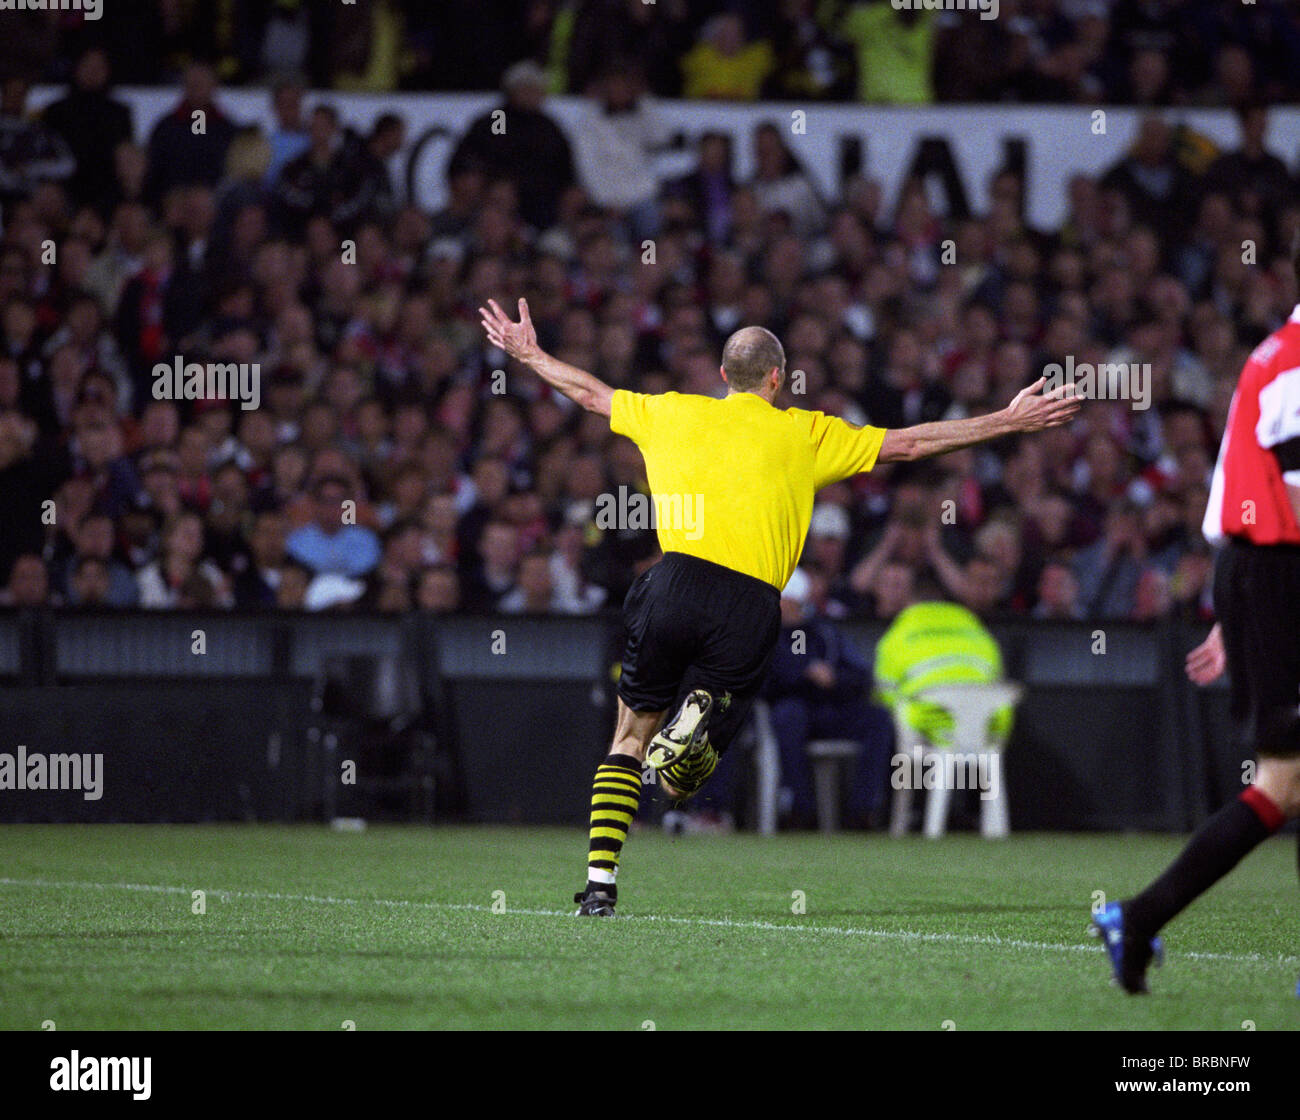 Footballer turns asn celebrates as he scores a goal Stock Photo